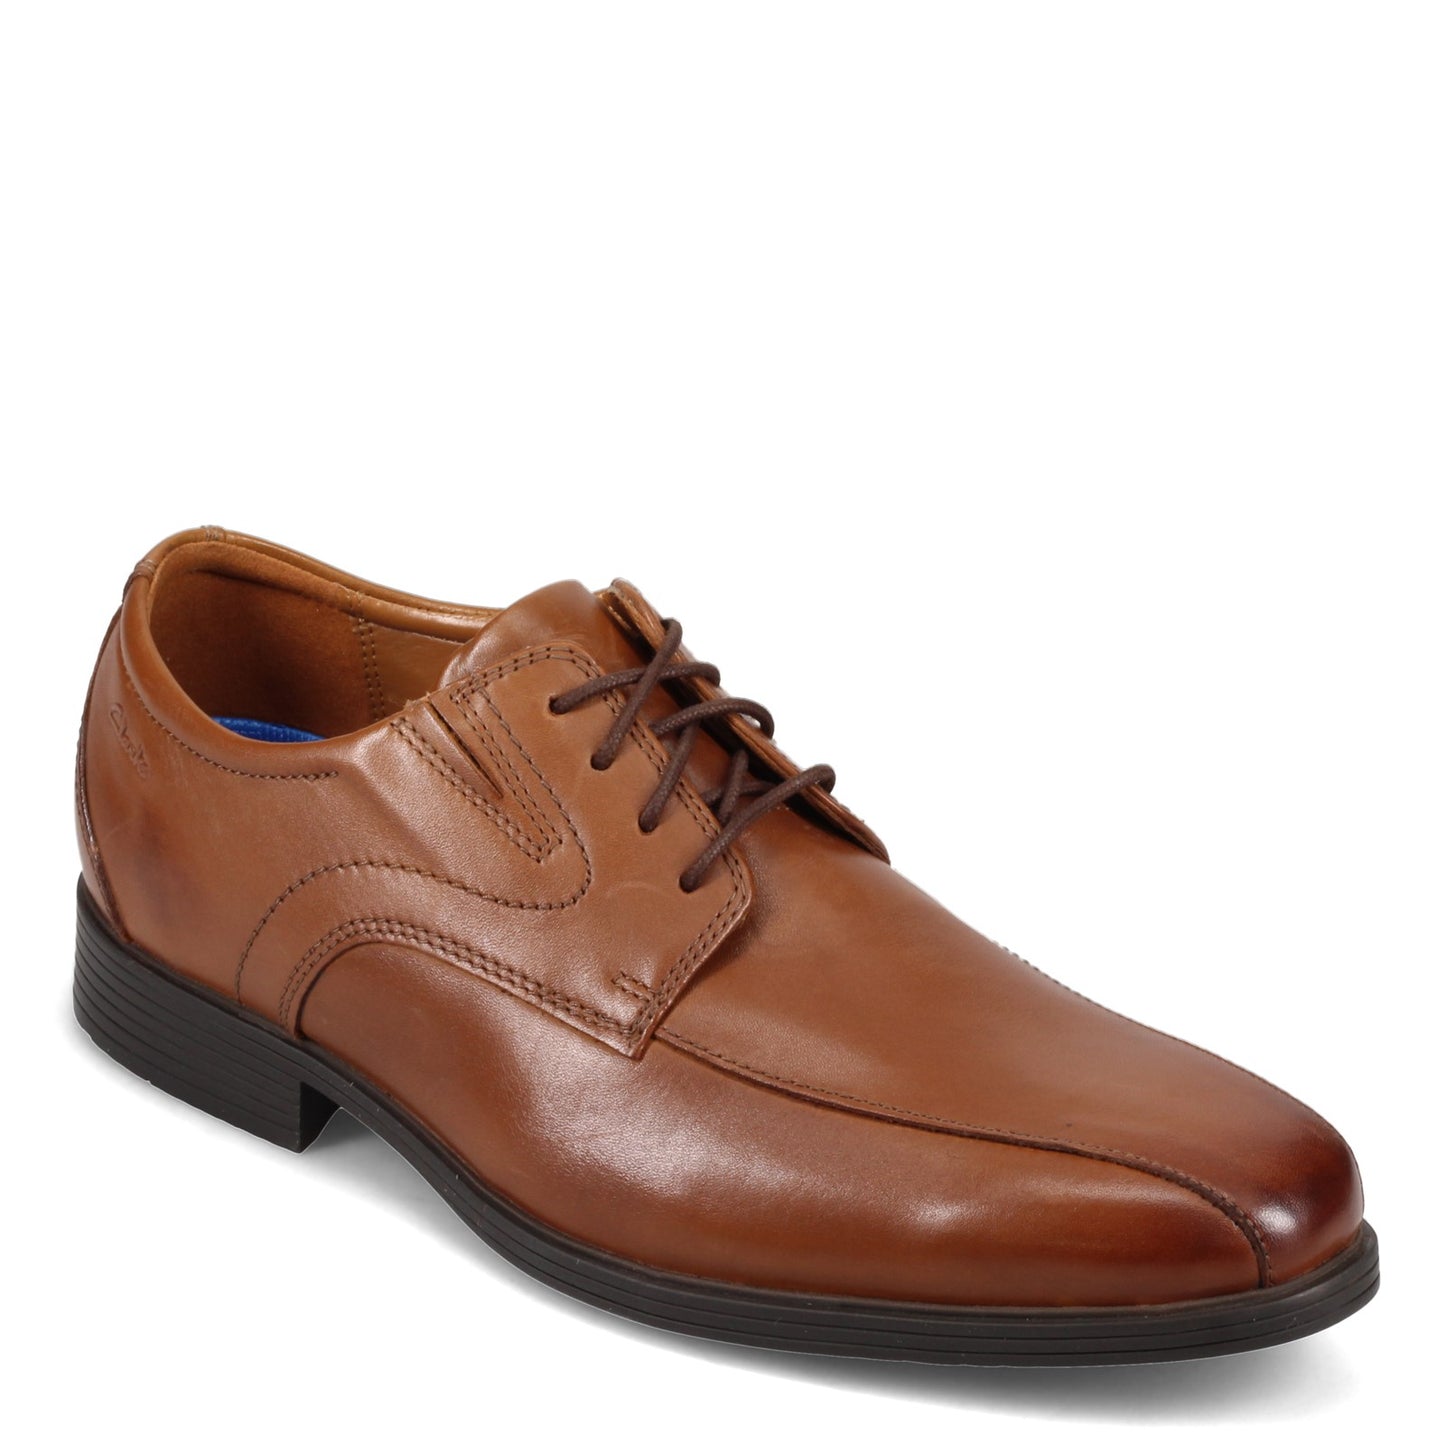 Peltz Shoes  Men's Clarks Whiddon Pace Oxford DARK TAN 26152908